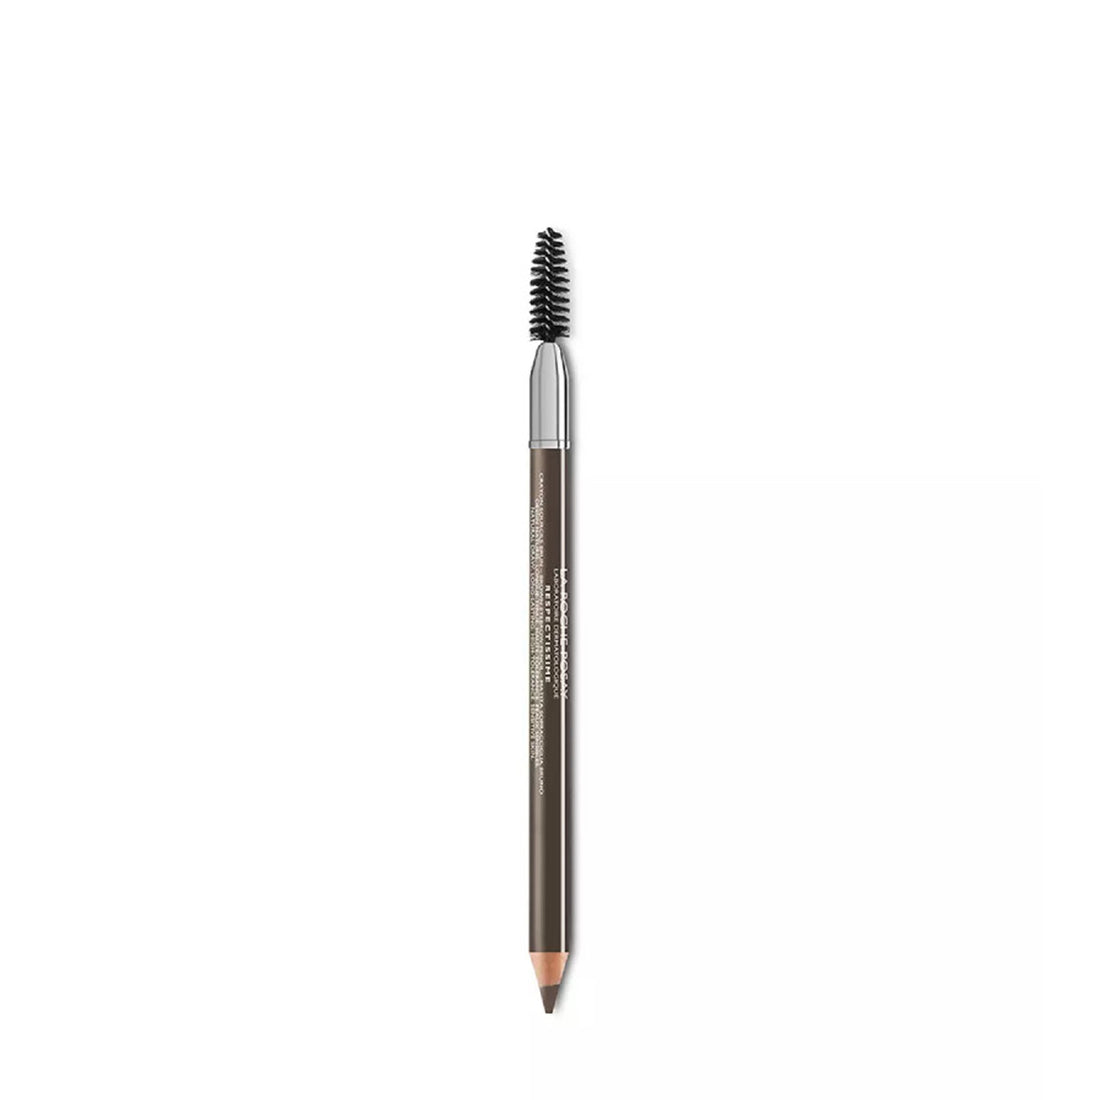 La Roche-Posay Respectissime Brown Eyebrown Pencil 1.3g